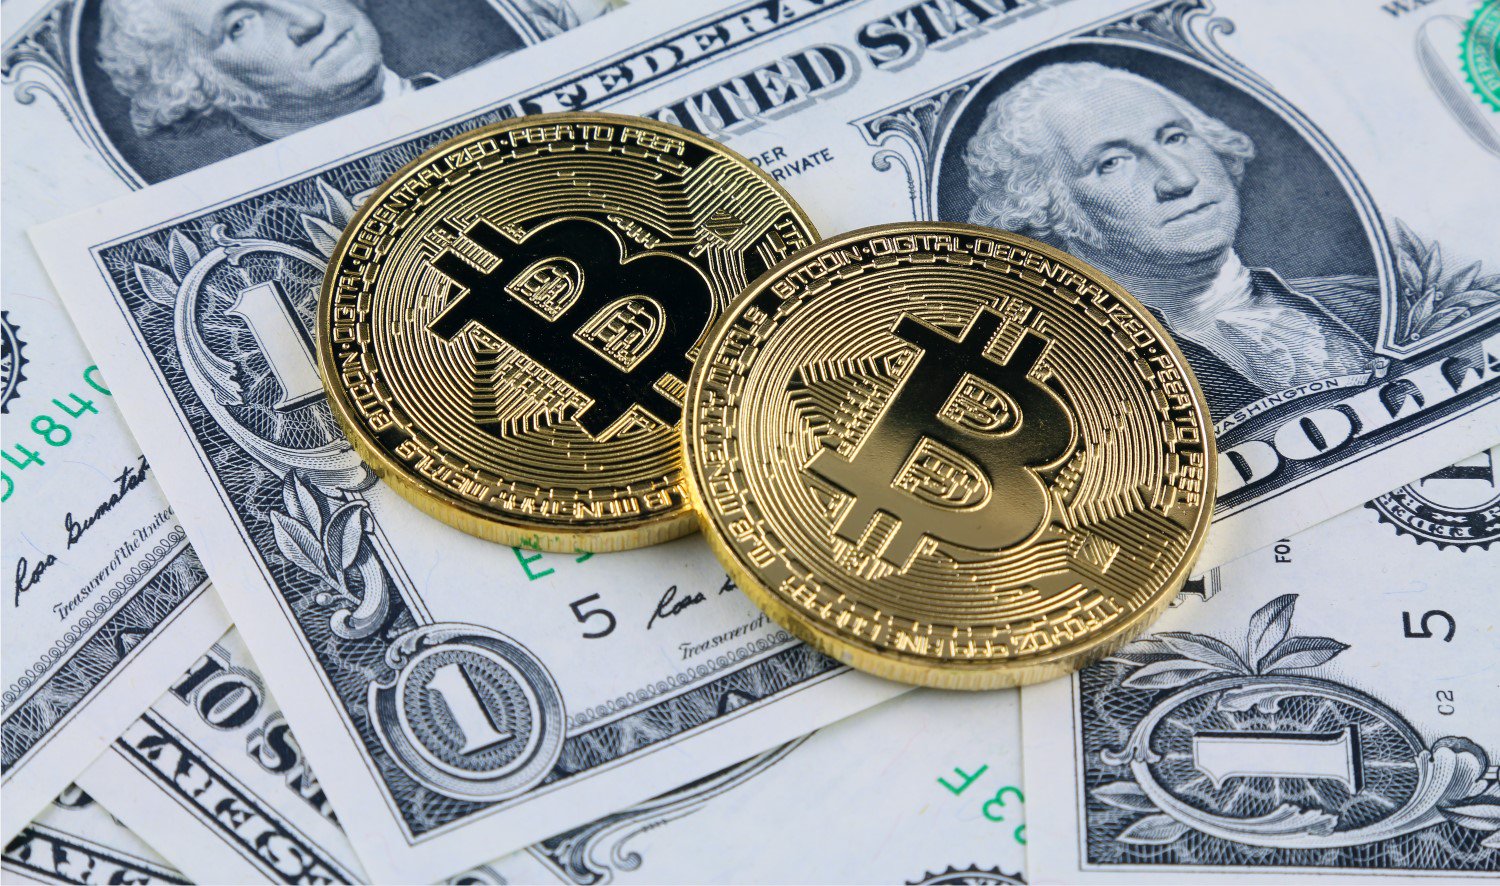 Utc bitcoin pay by перевод на русский